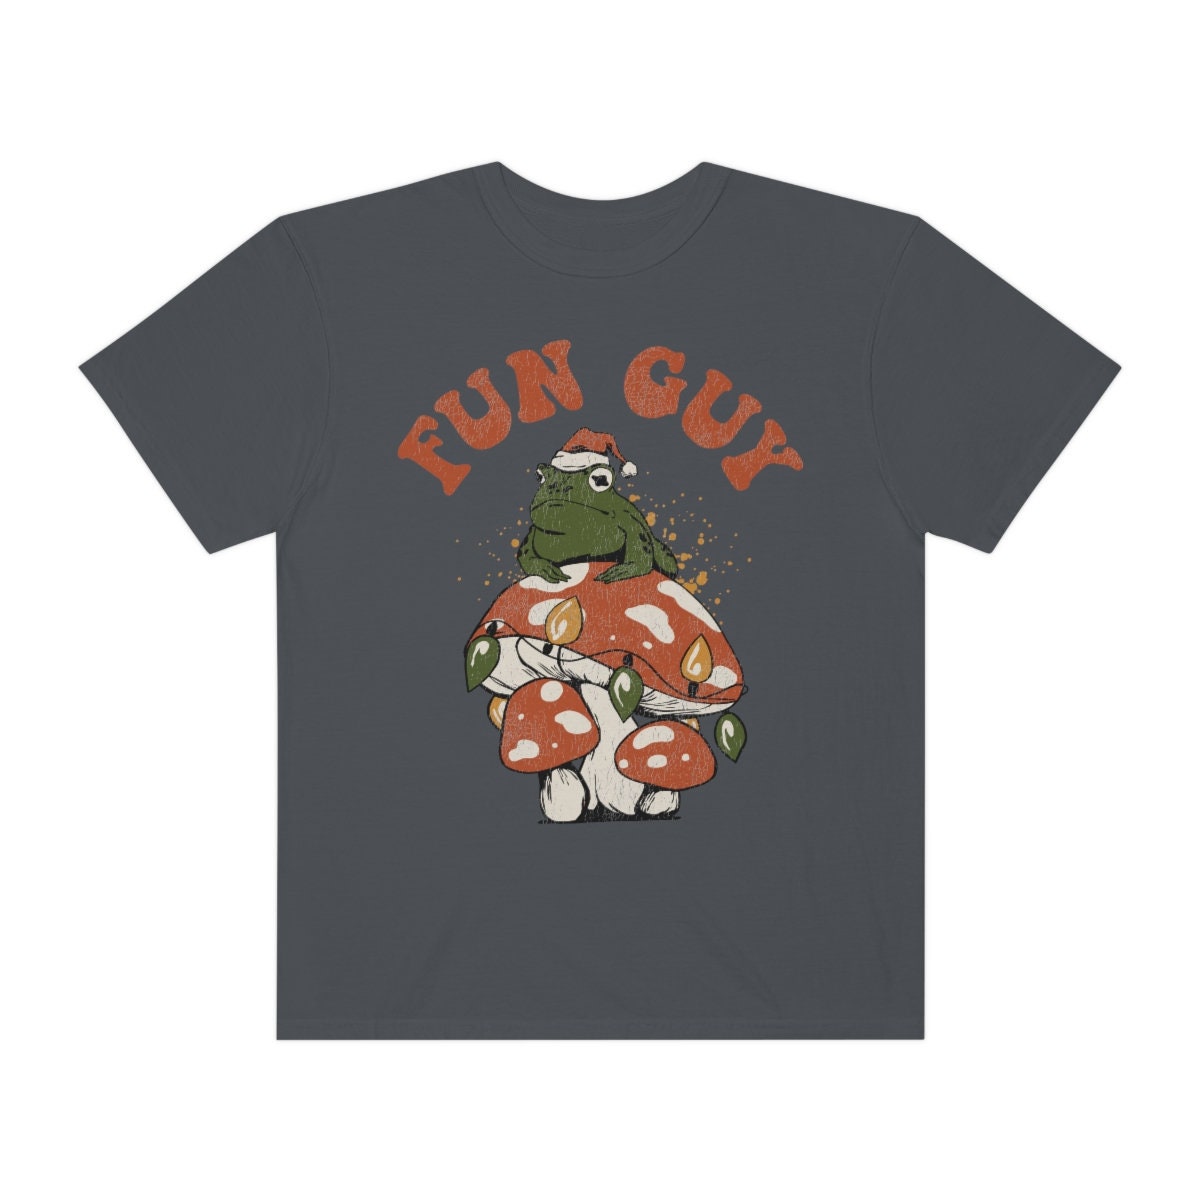 Discover Christmas Fun guy funny T shirt Mushroom Humor Tee